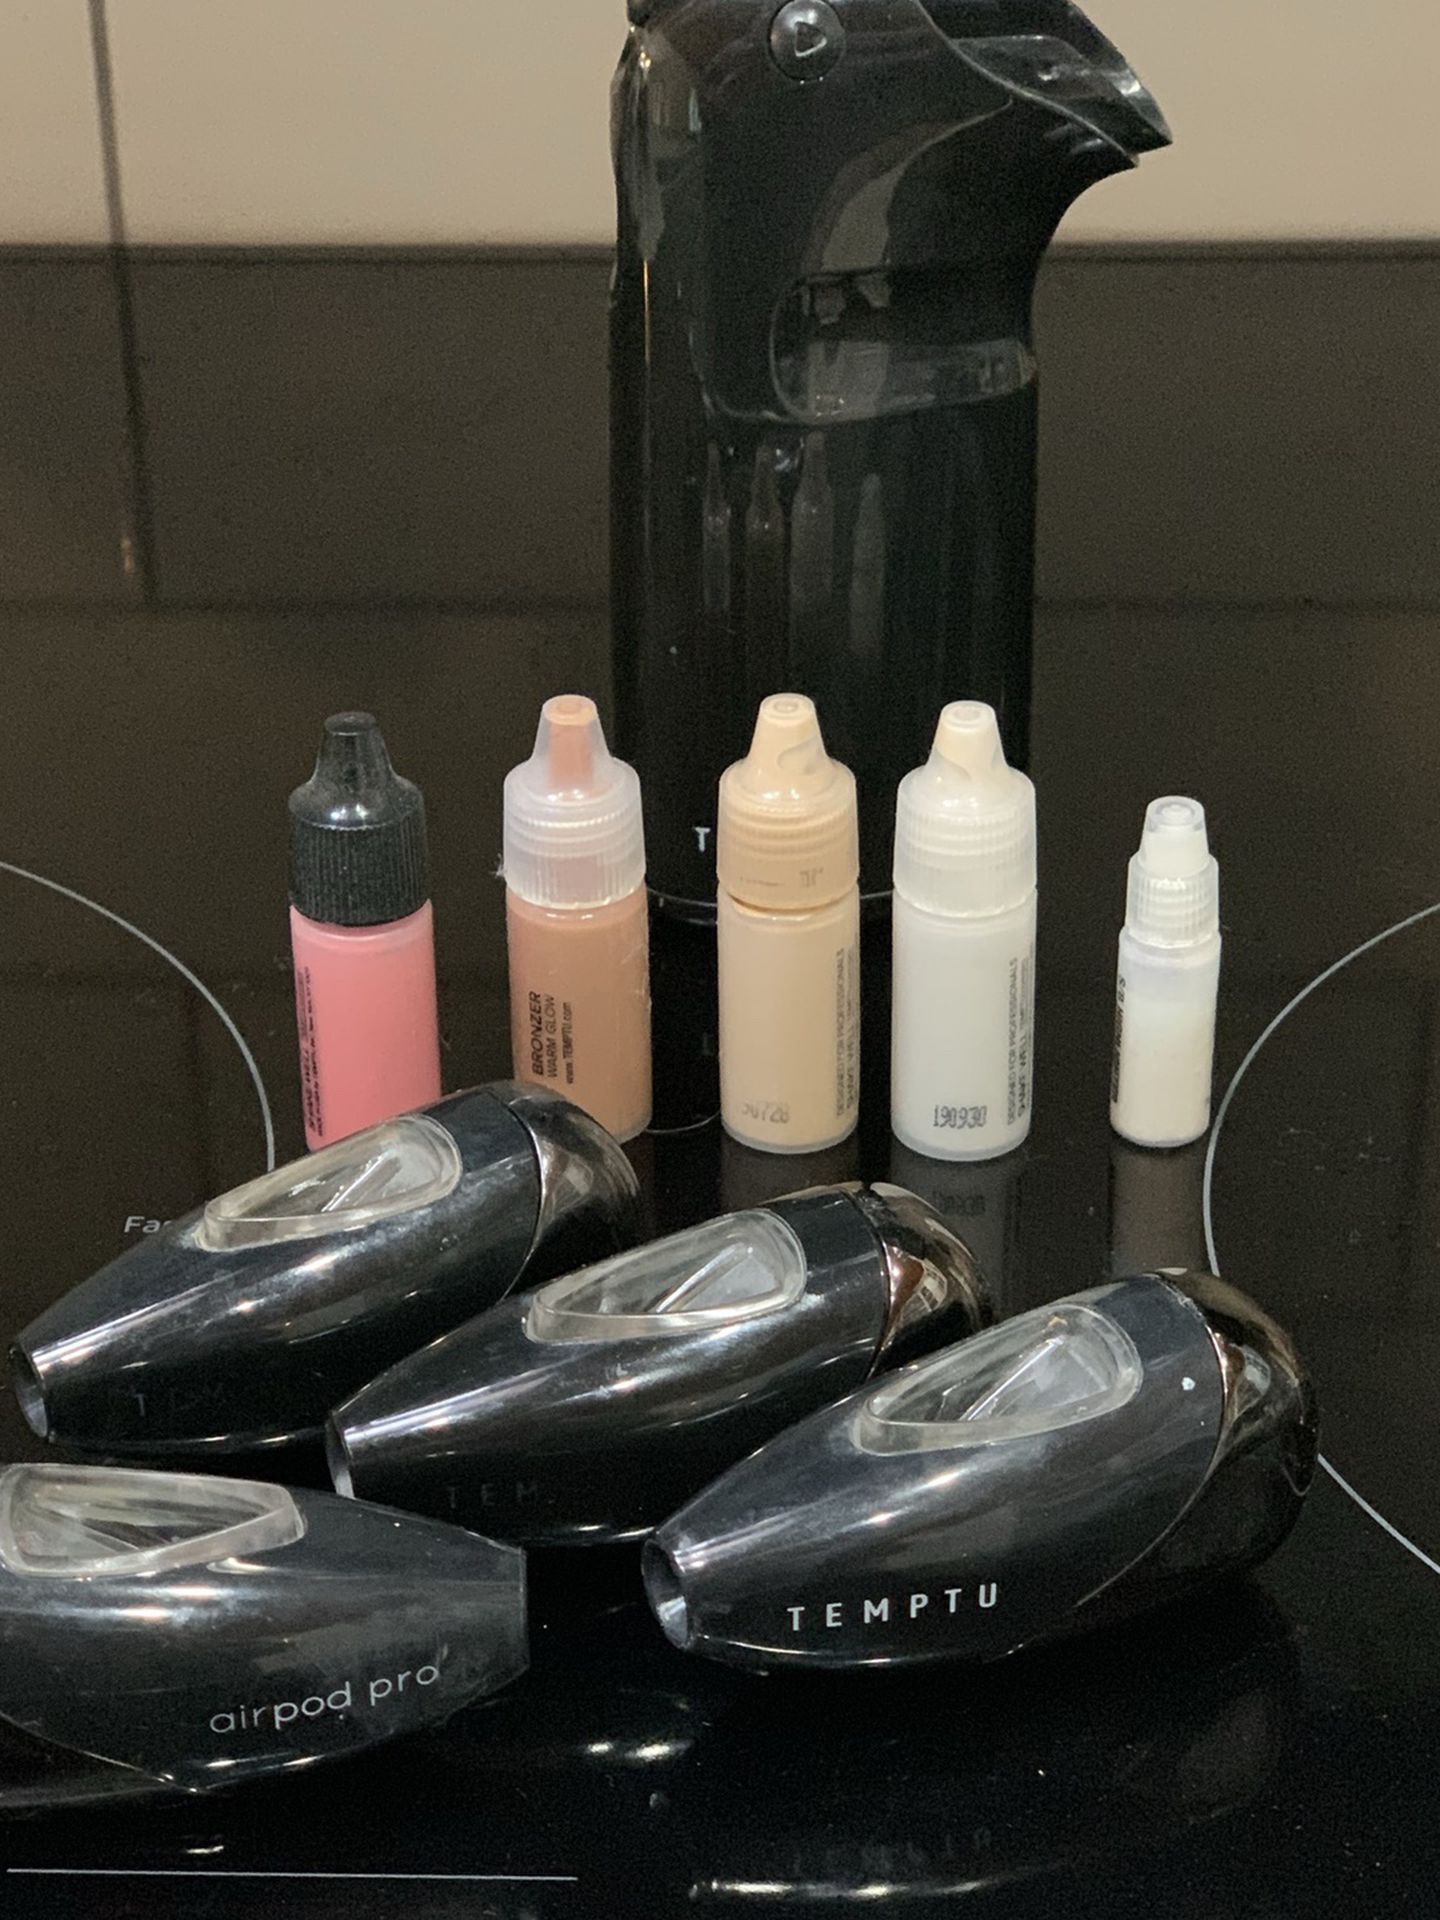 Temptu AirPod Pro and makeup airbrush machine and kit